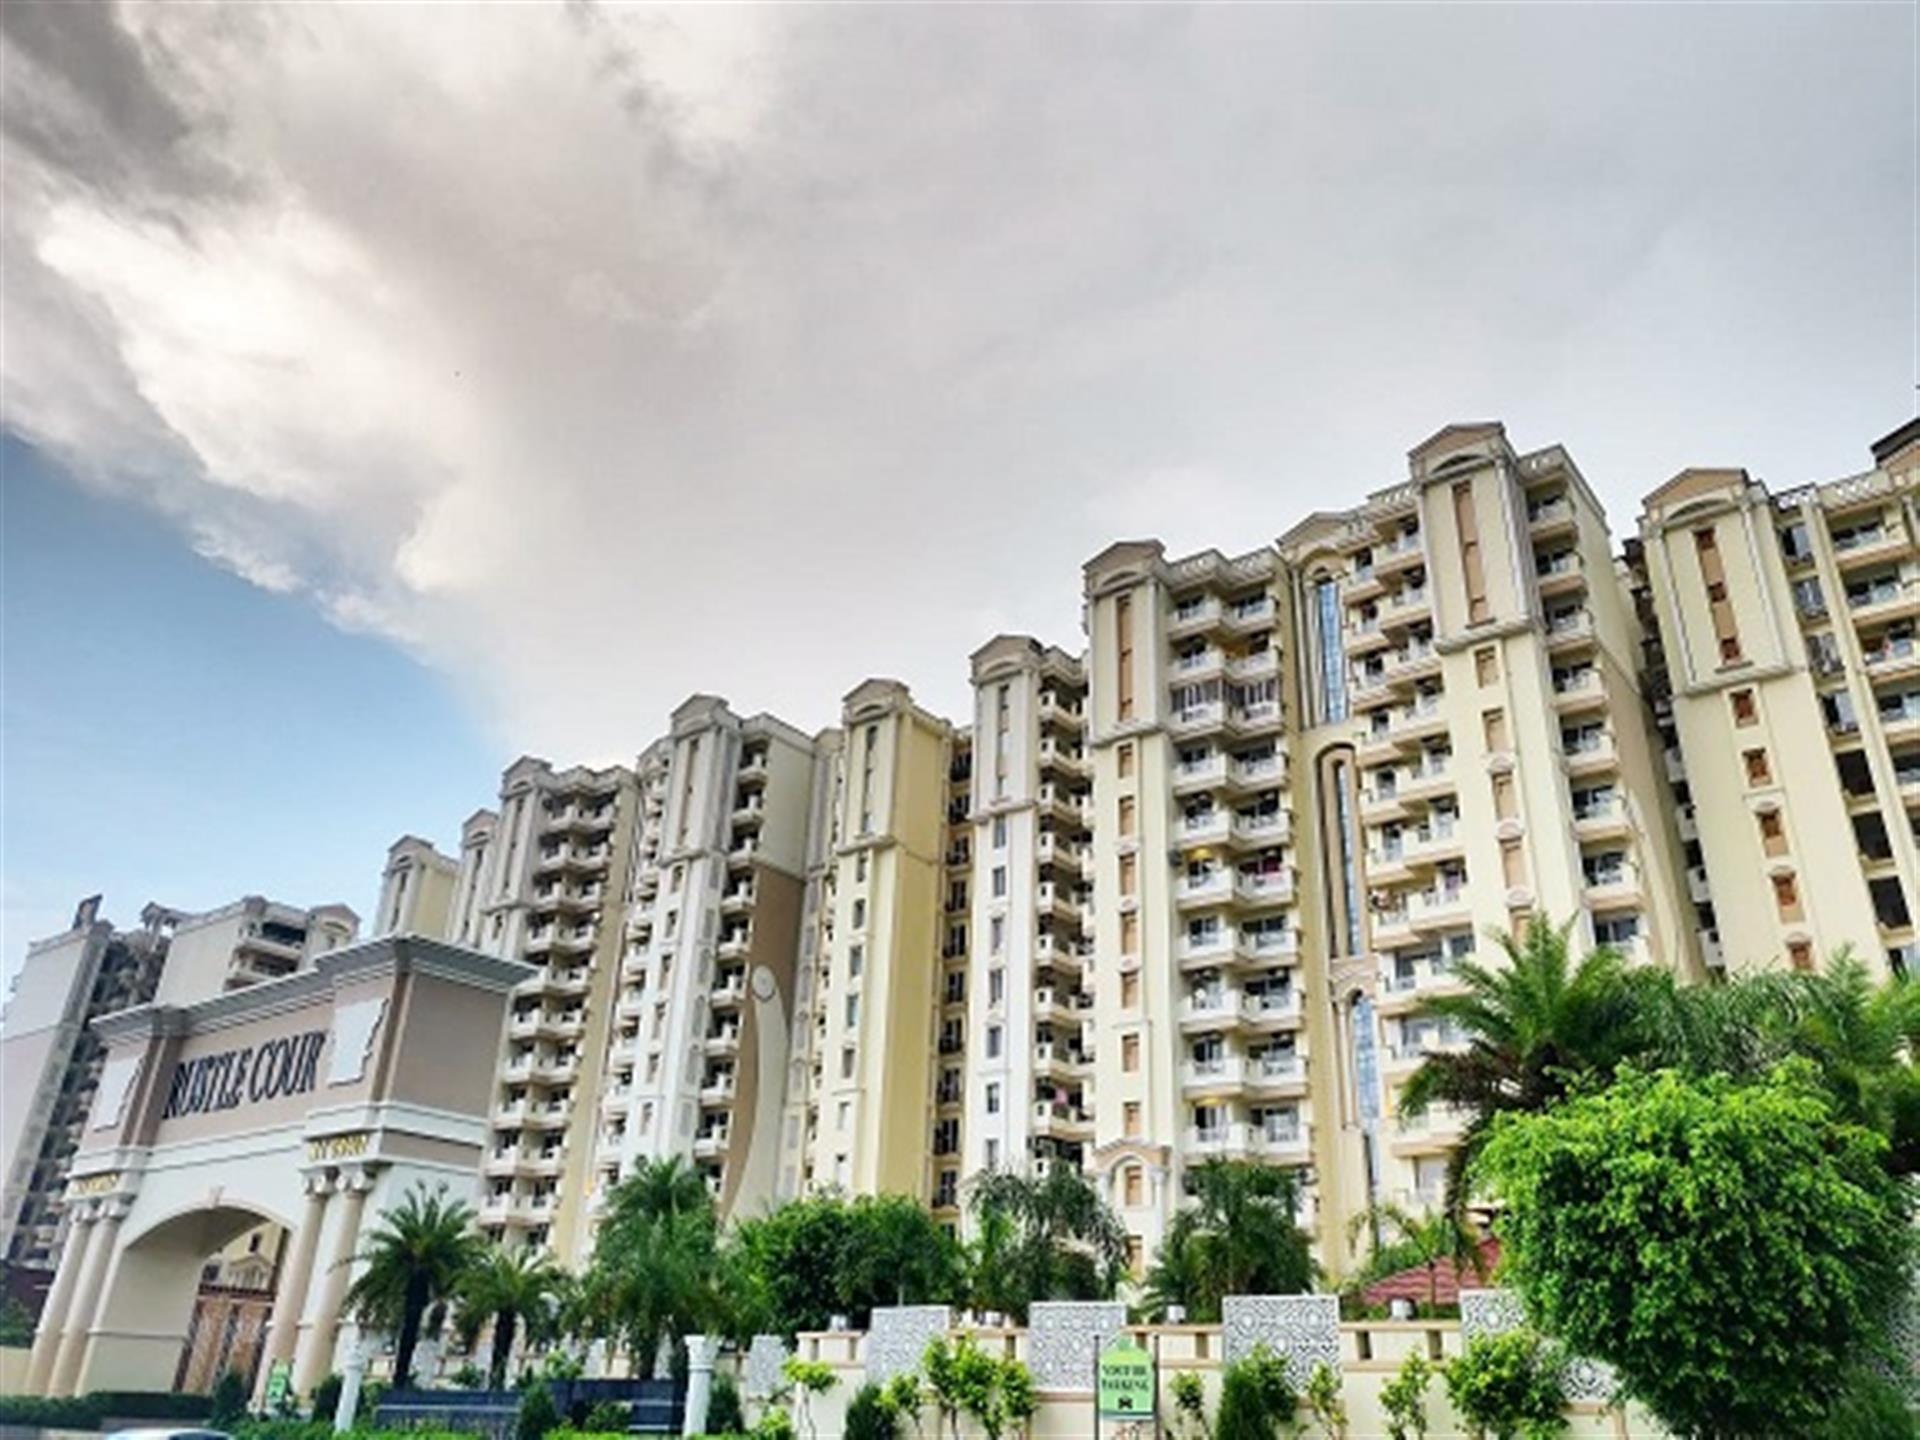 mi-rustle-court-gomti-nagar-extension-lucknow-2-bhk-apartment